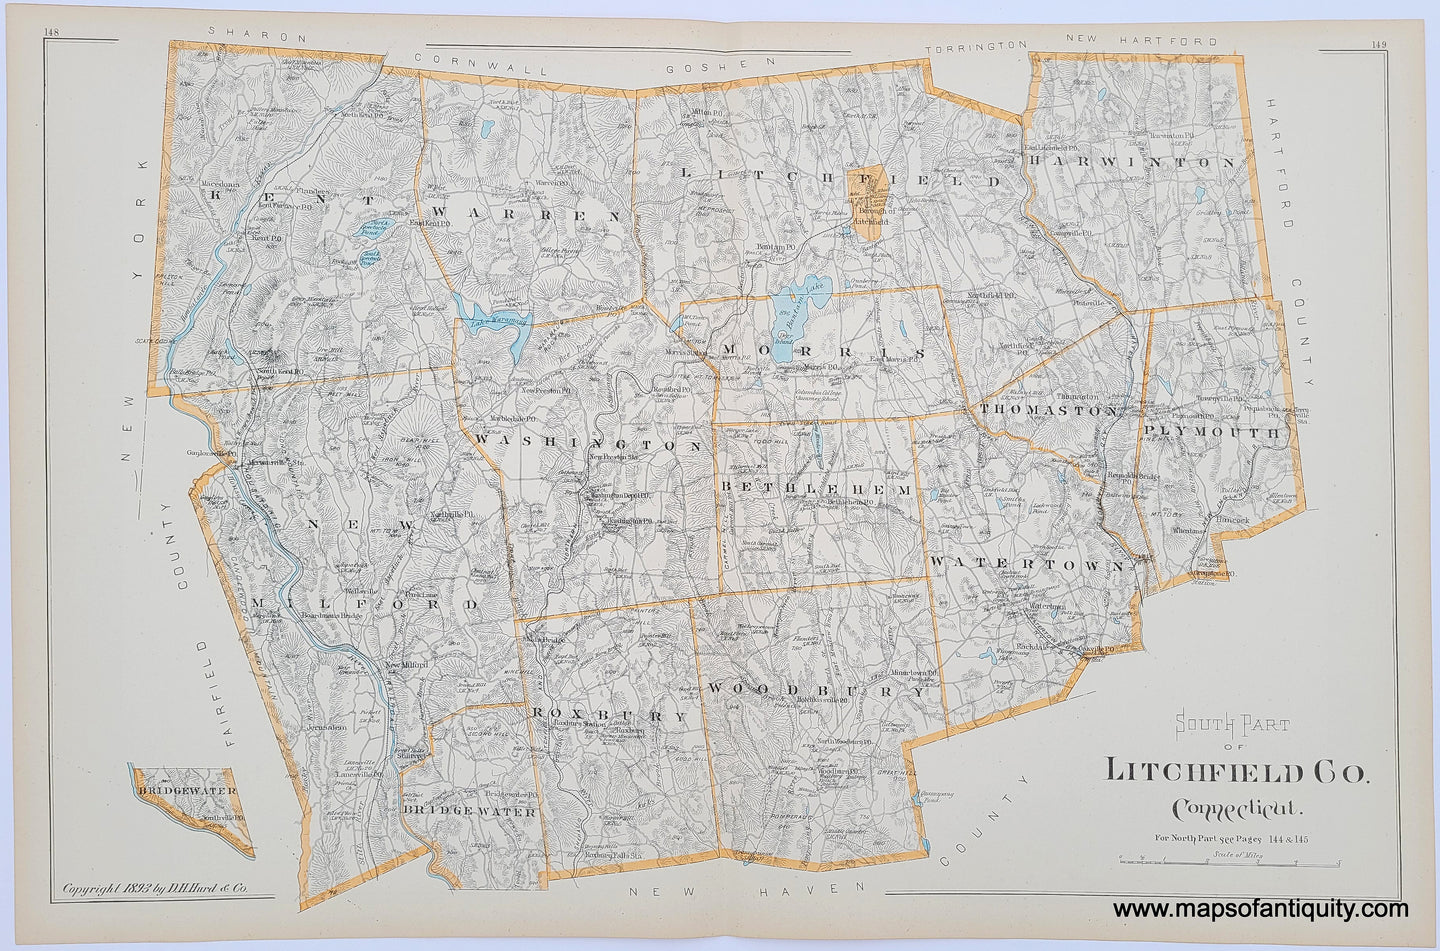 Antique-Hand-Colored-Map-South-Part-of-Litchfield-Co.-Connecticut-****-Connecticut--1893-D.H.-Hurd-Maps-Of-Antiquity